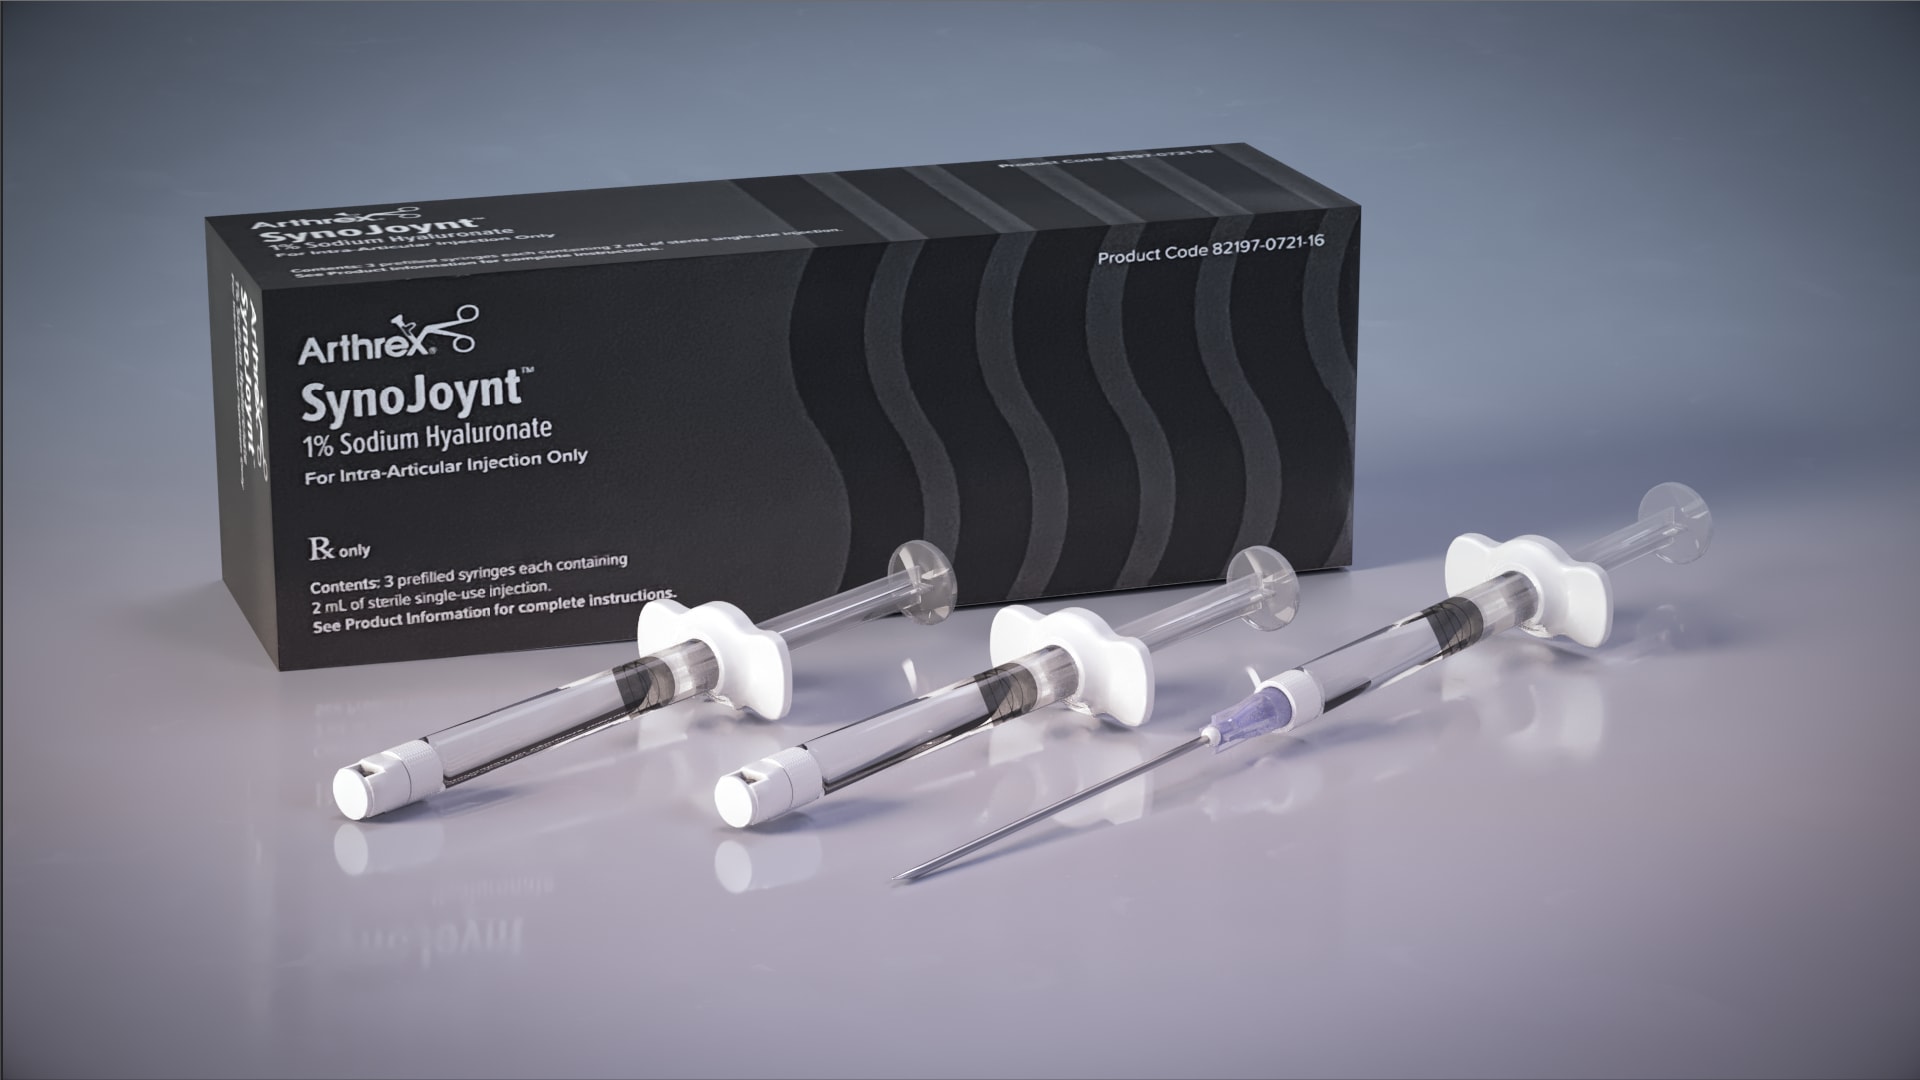 SynoJoynt® 1% Sodium Hyaluronate